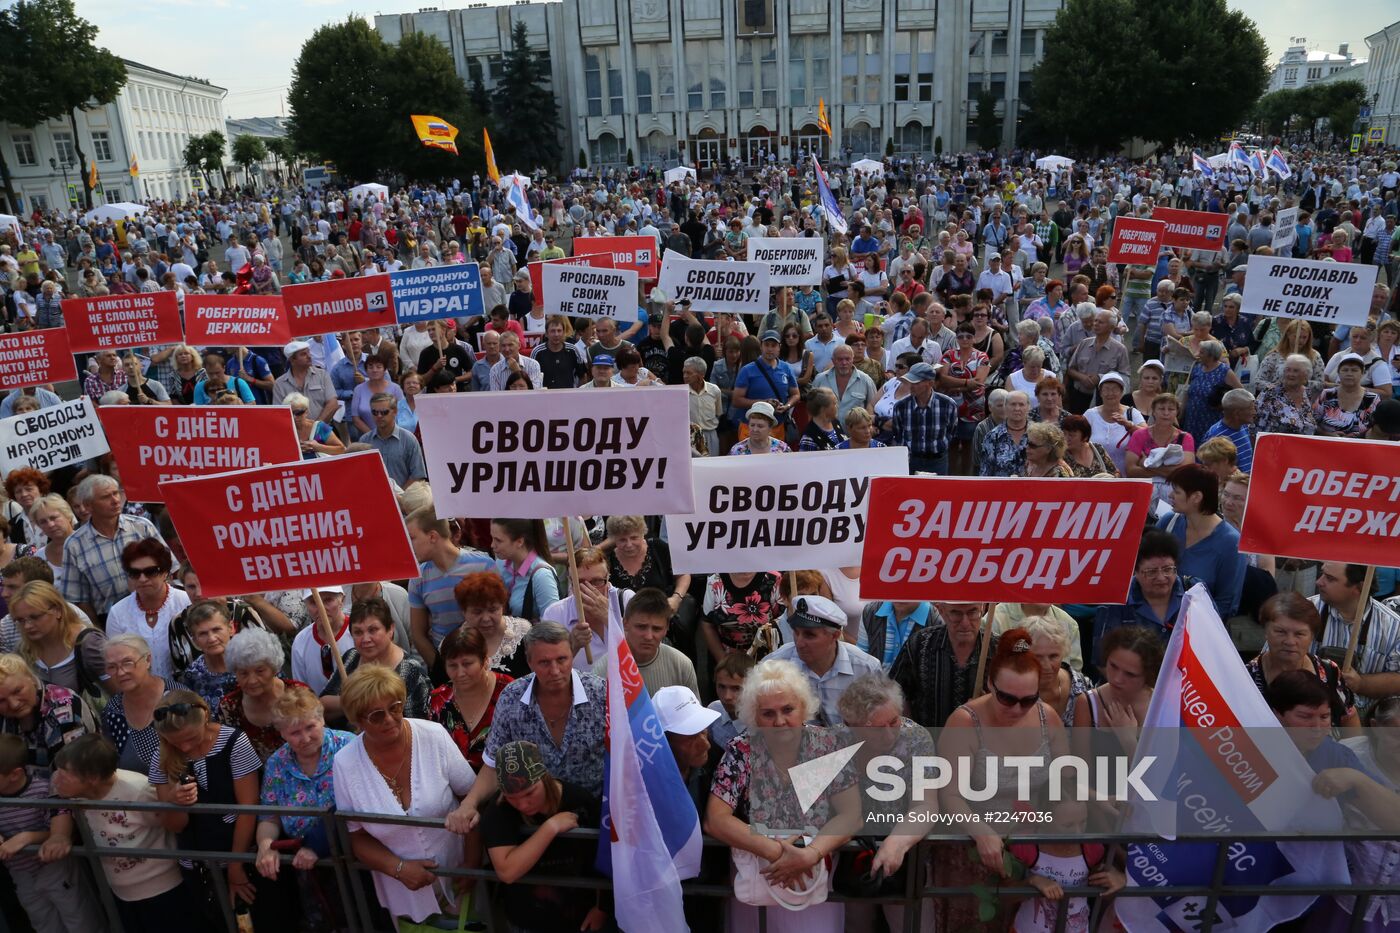 People's rally in support of Yaroslavl Mayor Yevgeny Urlashov